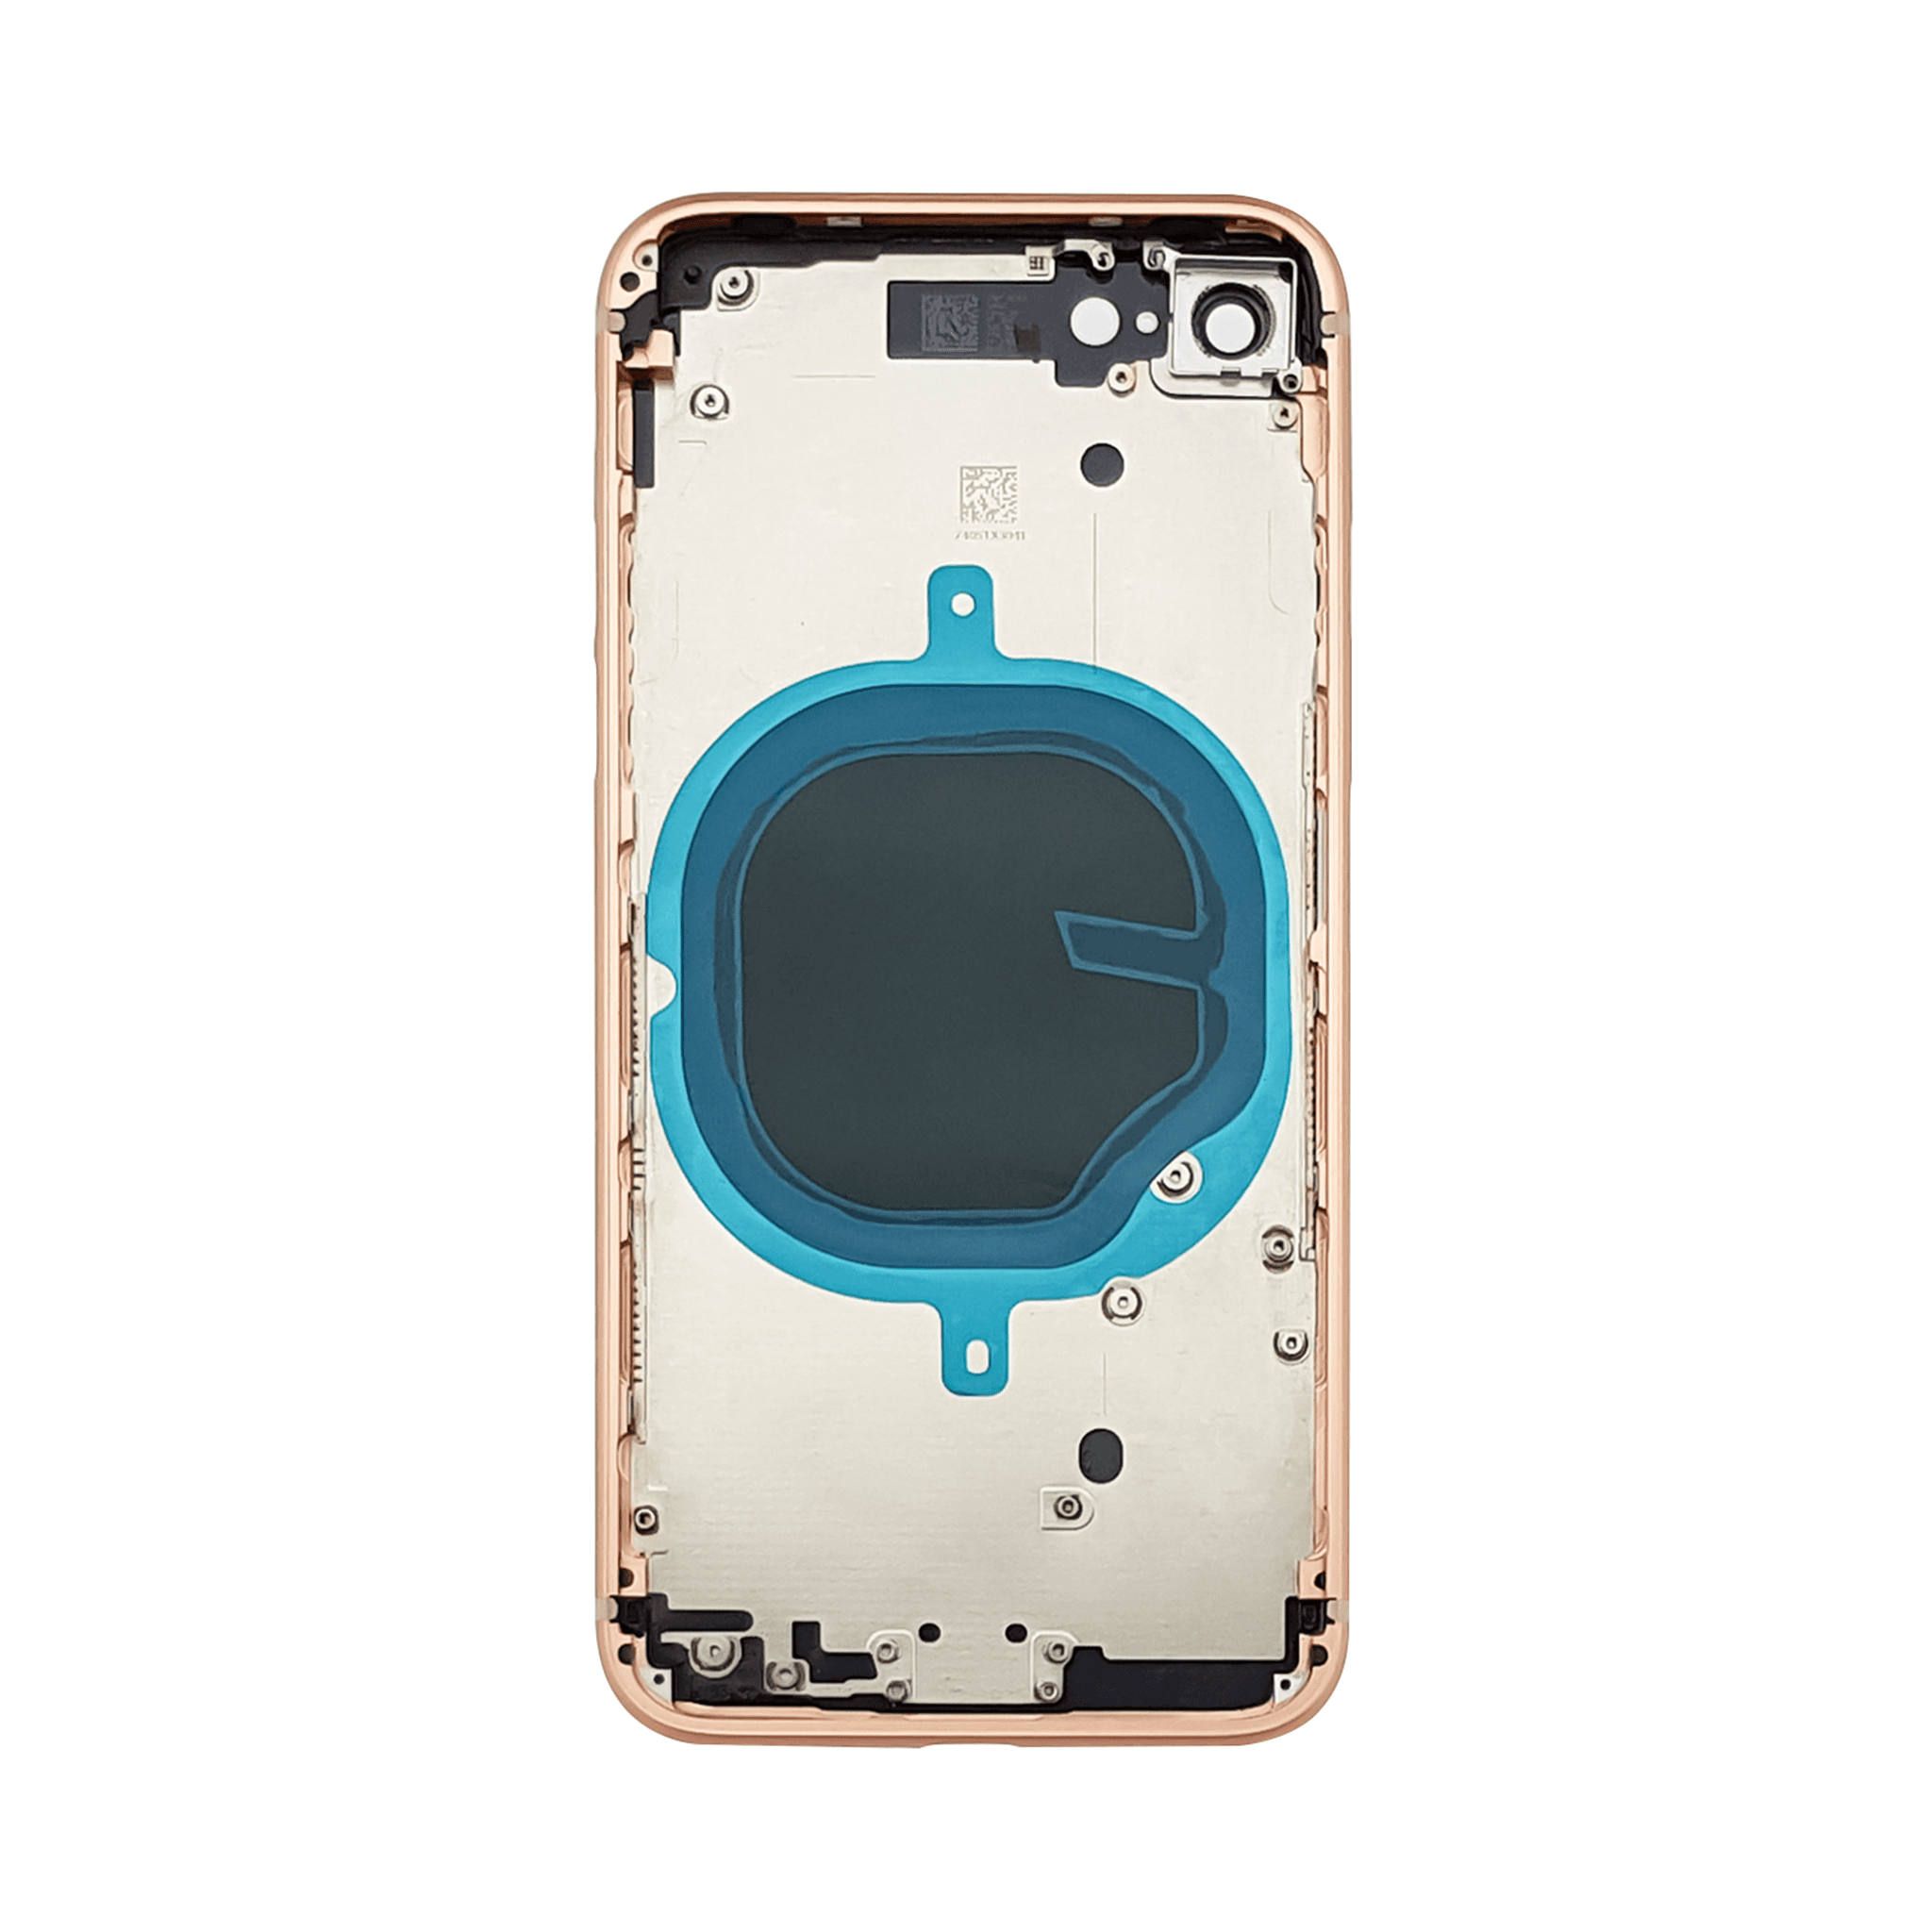 Korpus + kryt baterie iPhone 8 zlato - růžový